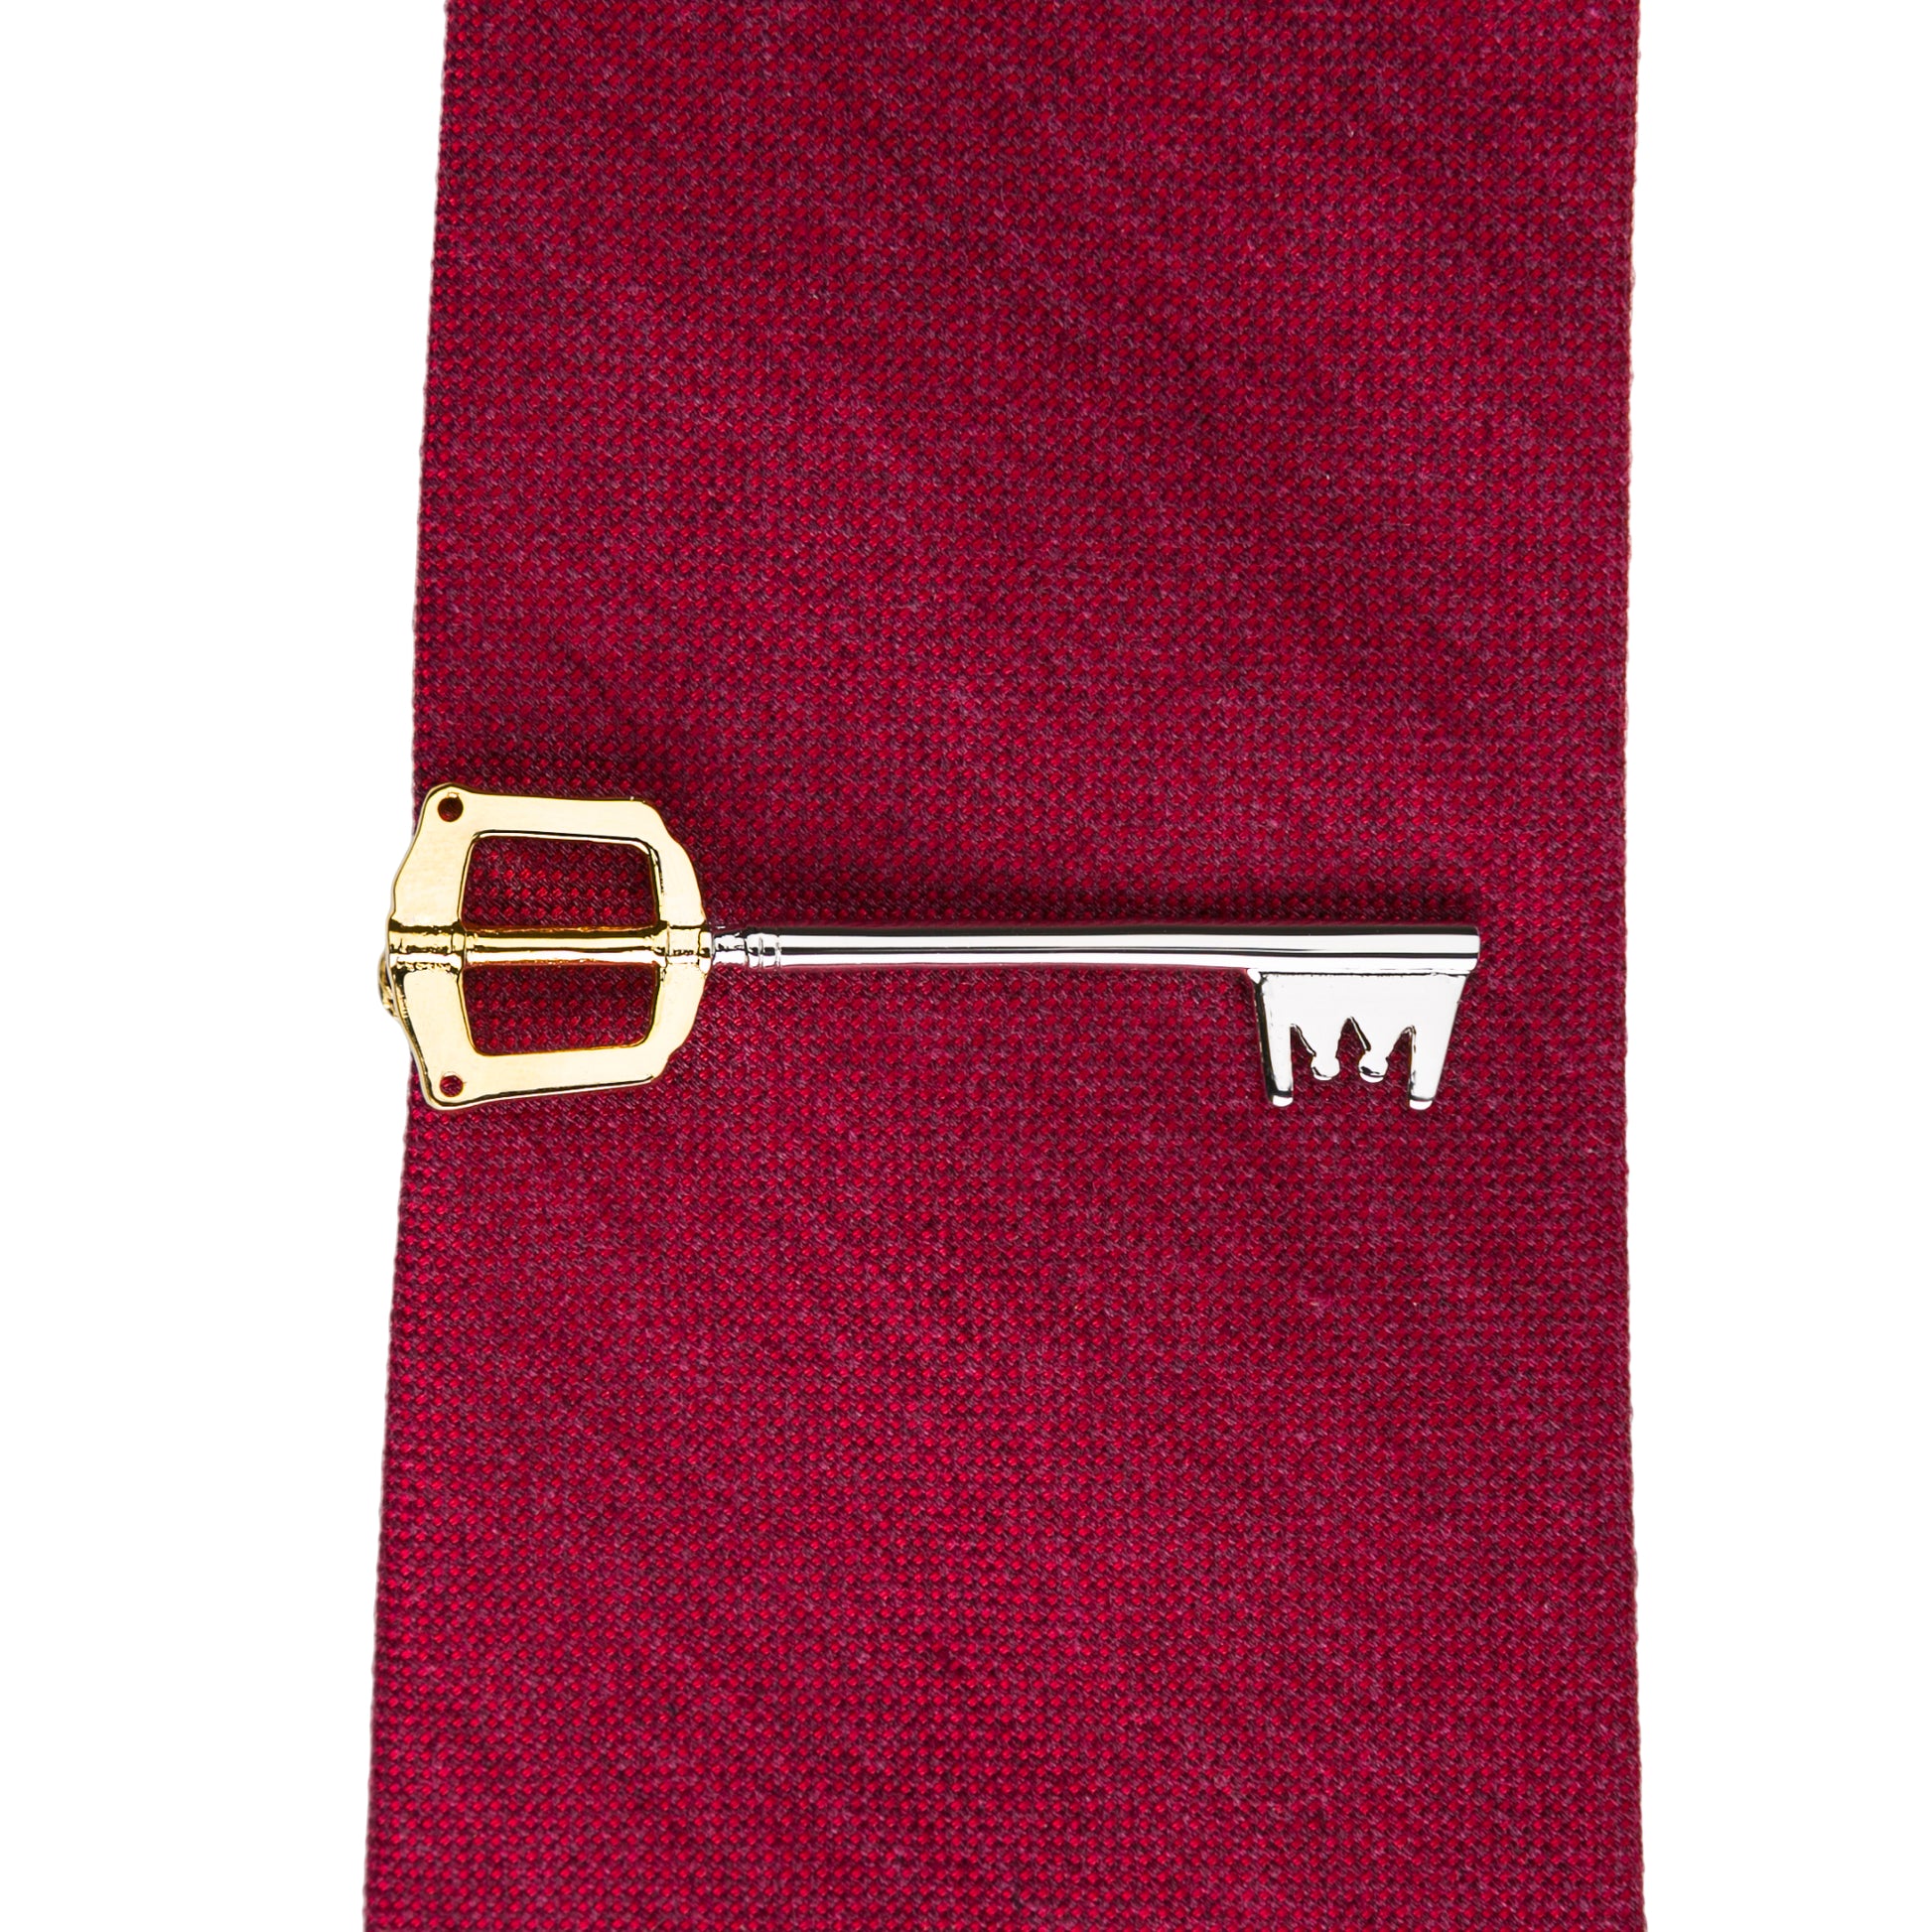 The Kingdom Key (Tie Clip)